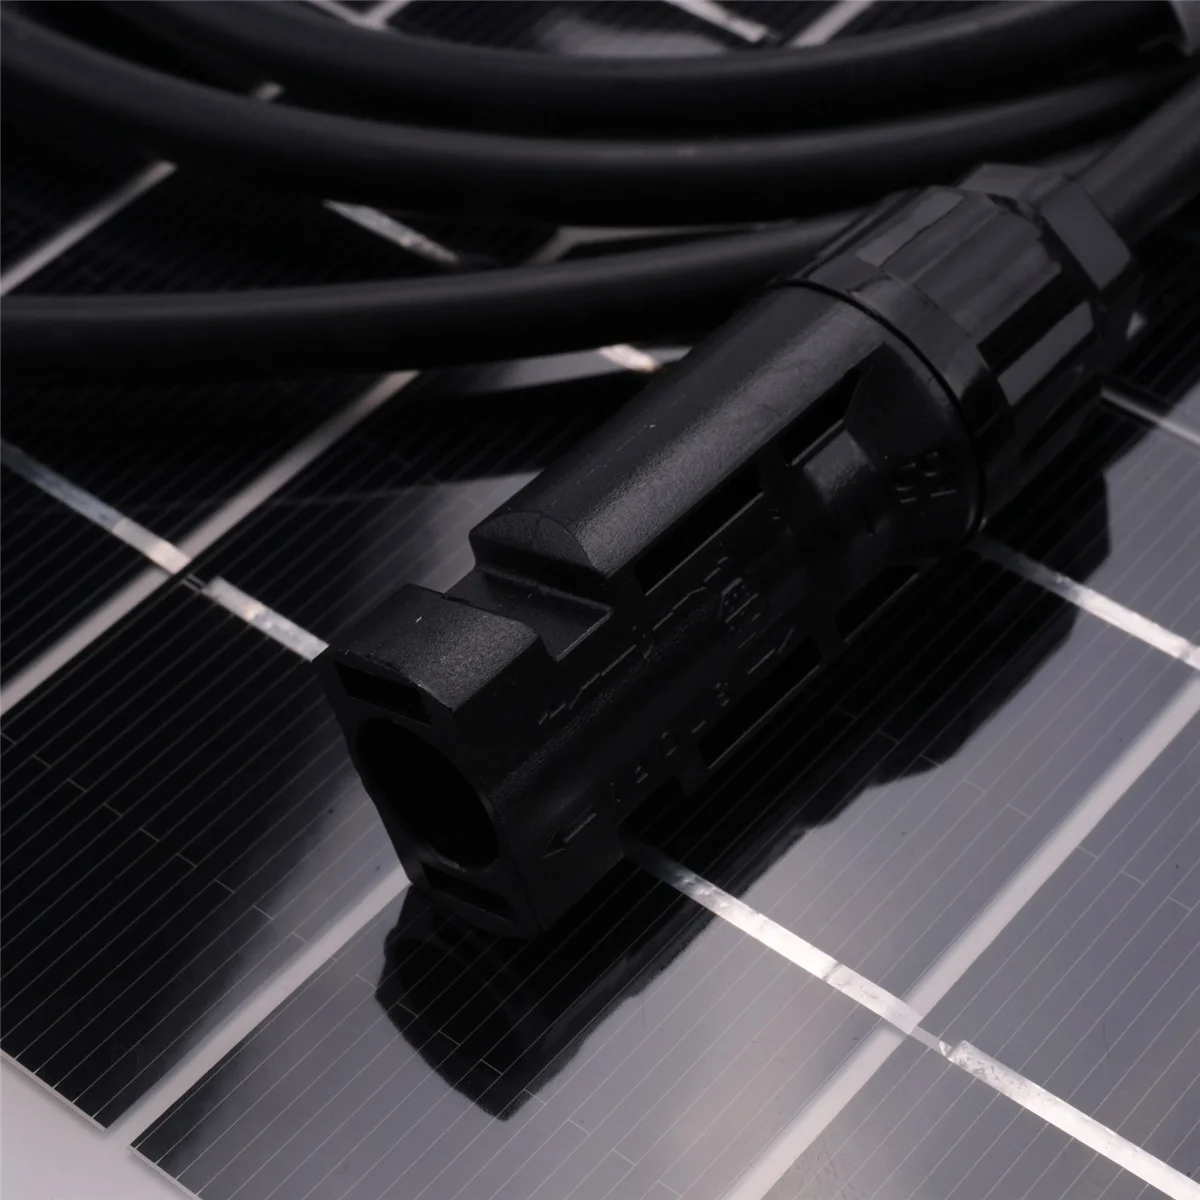 

30W Watt Portable Mono-Crystalline Solar Panel 18V RV Car Battery Charger